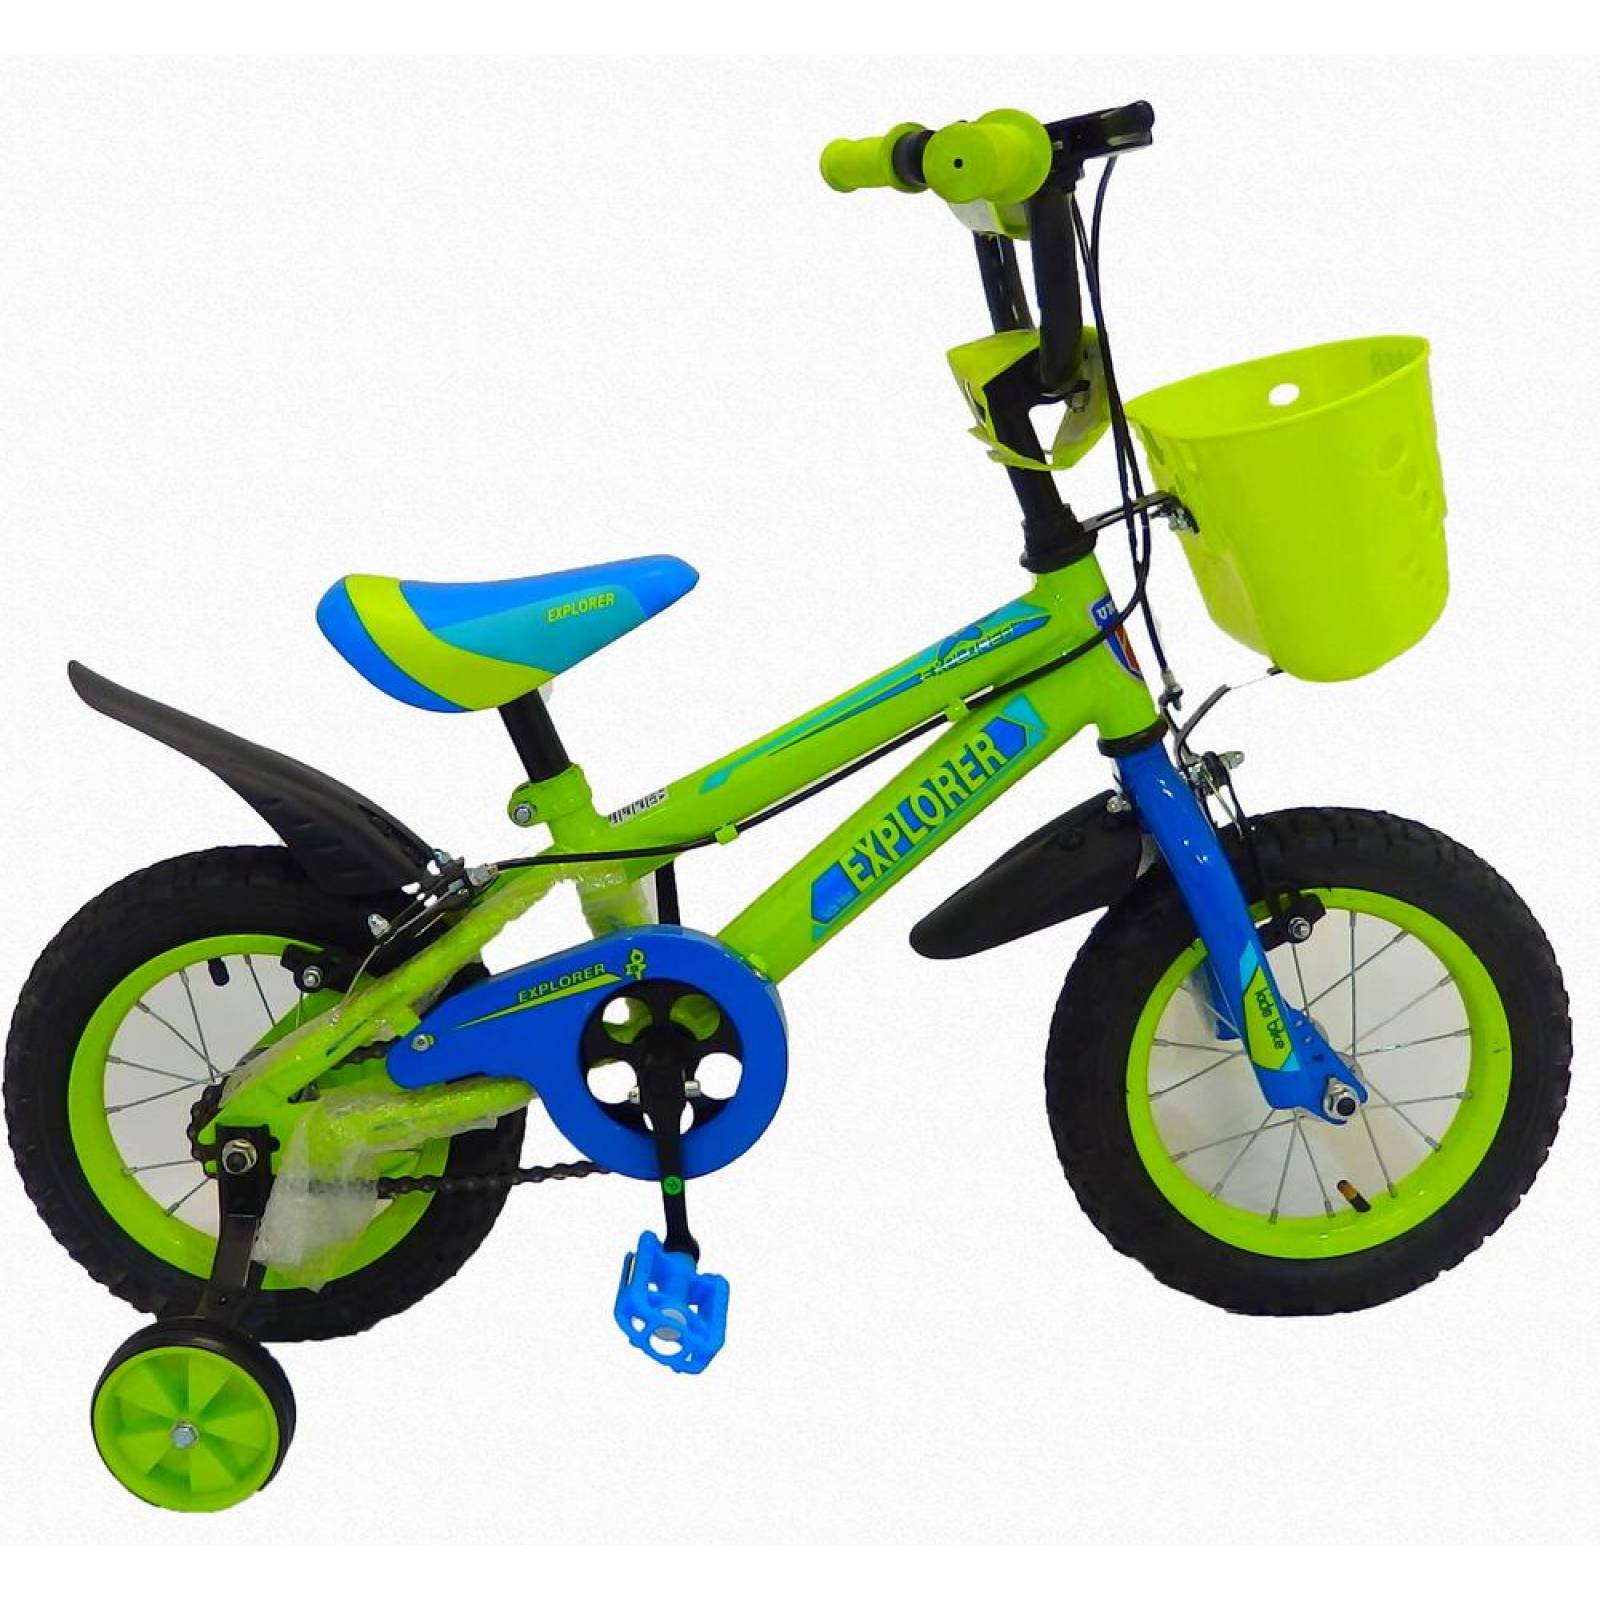 Bicicleta Infantil para niño rodada 12 Explor. Amarillo